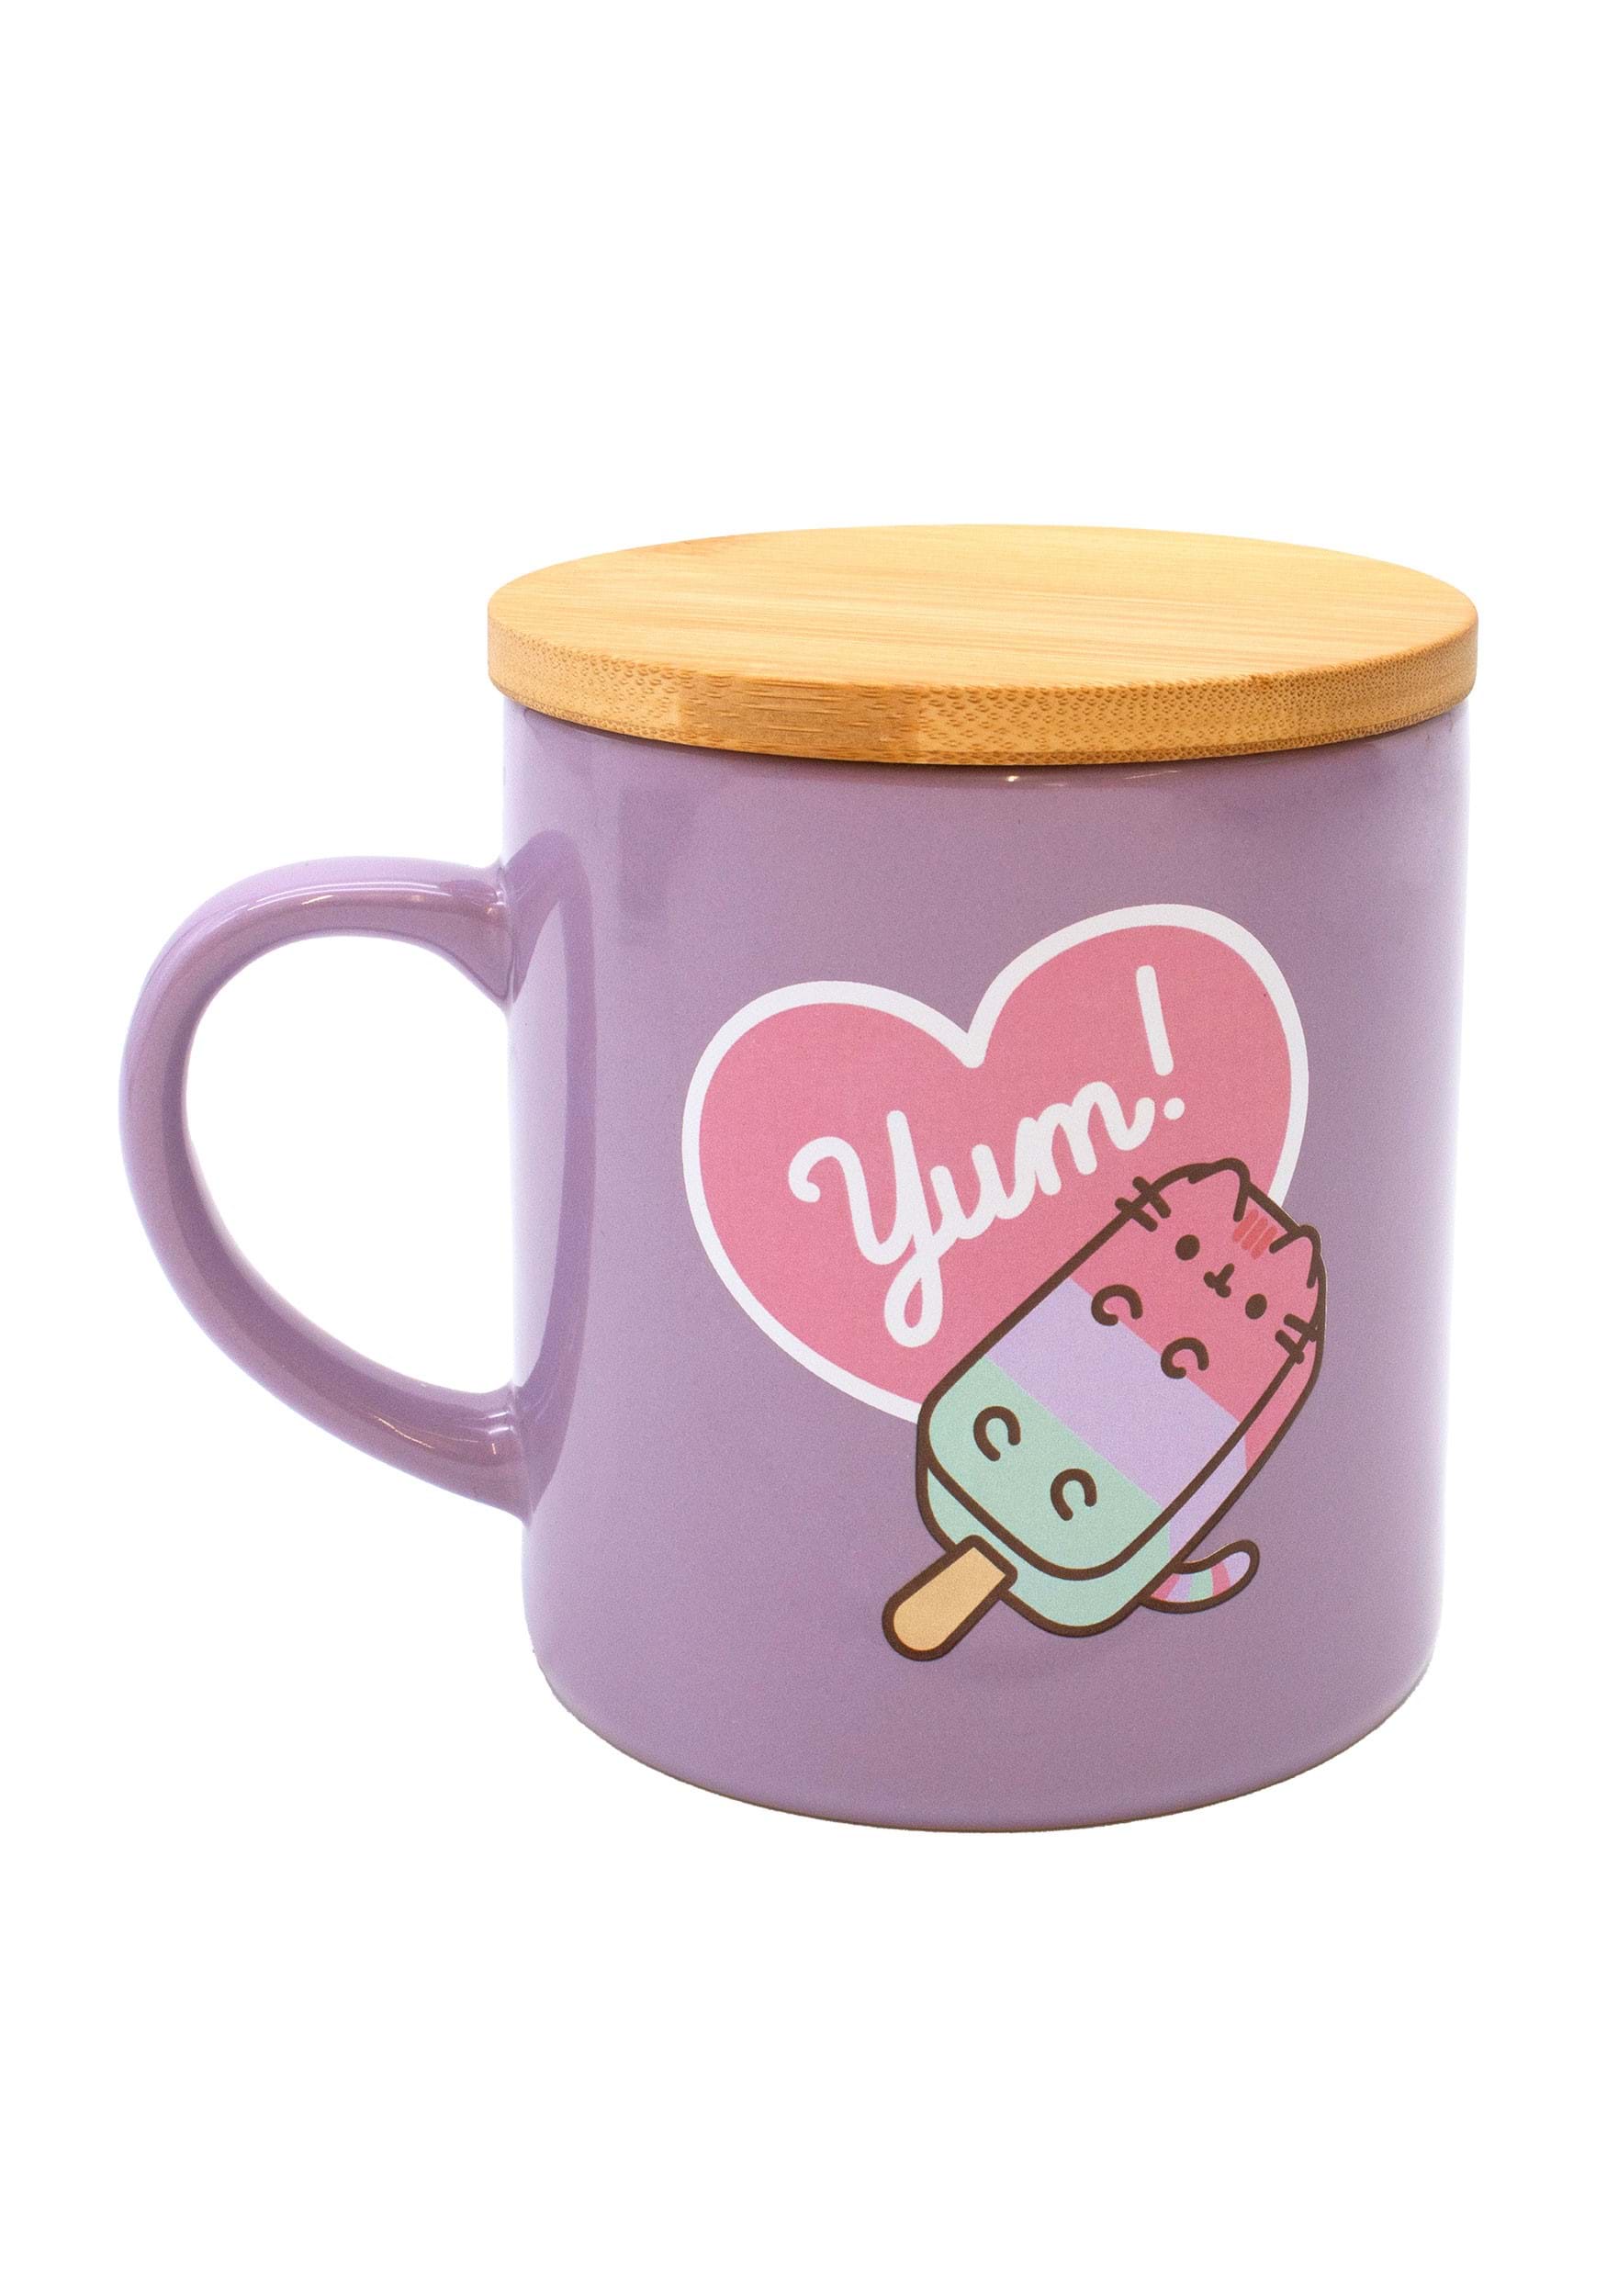 https://images.fun.com/products/91034/1-1/pusheen-purple-ice-cream-coaster-mug.jpg